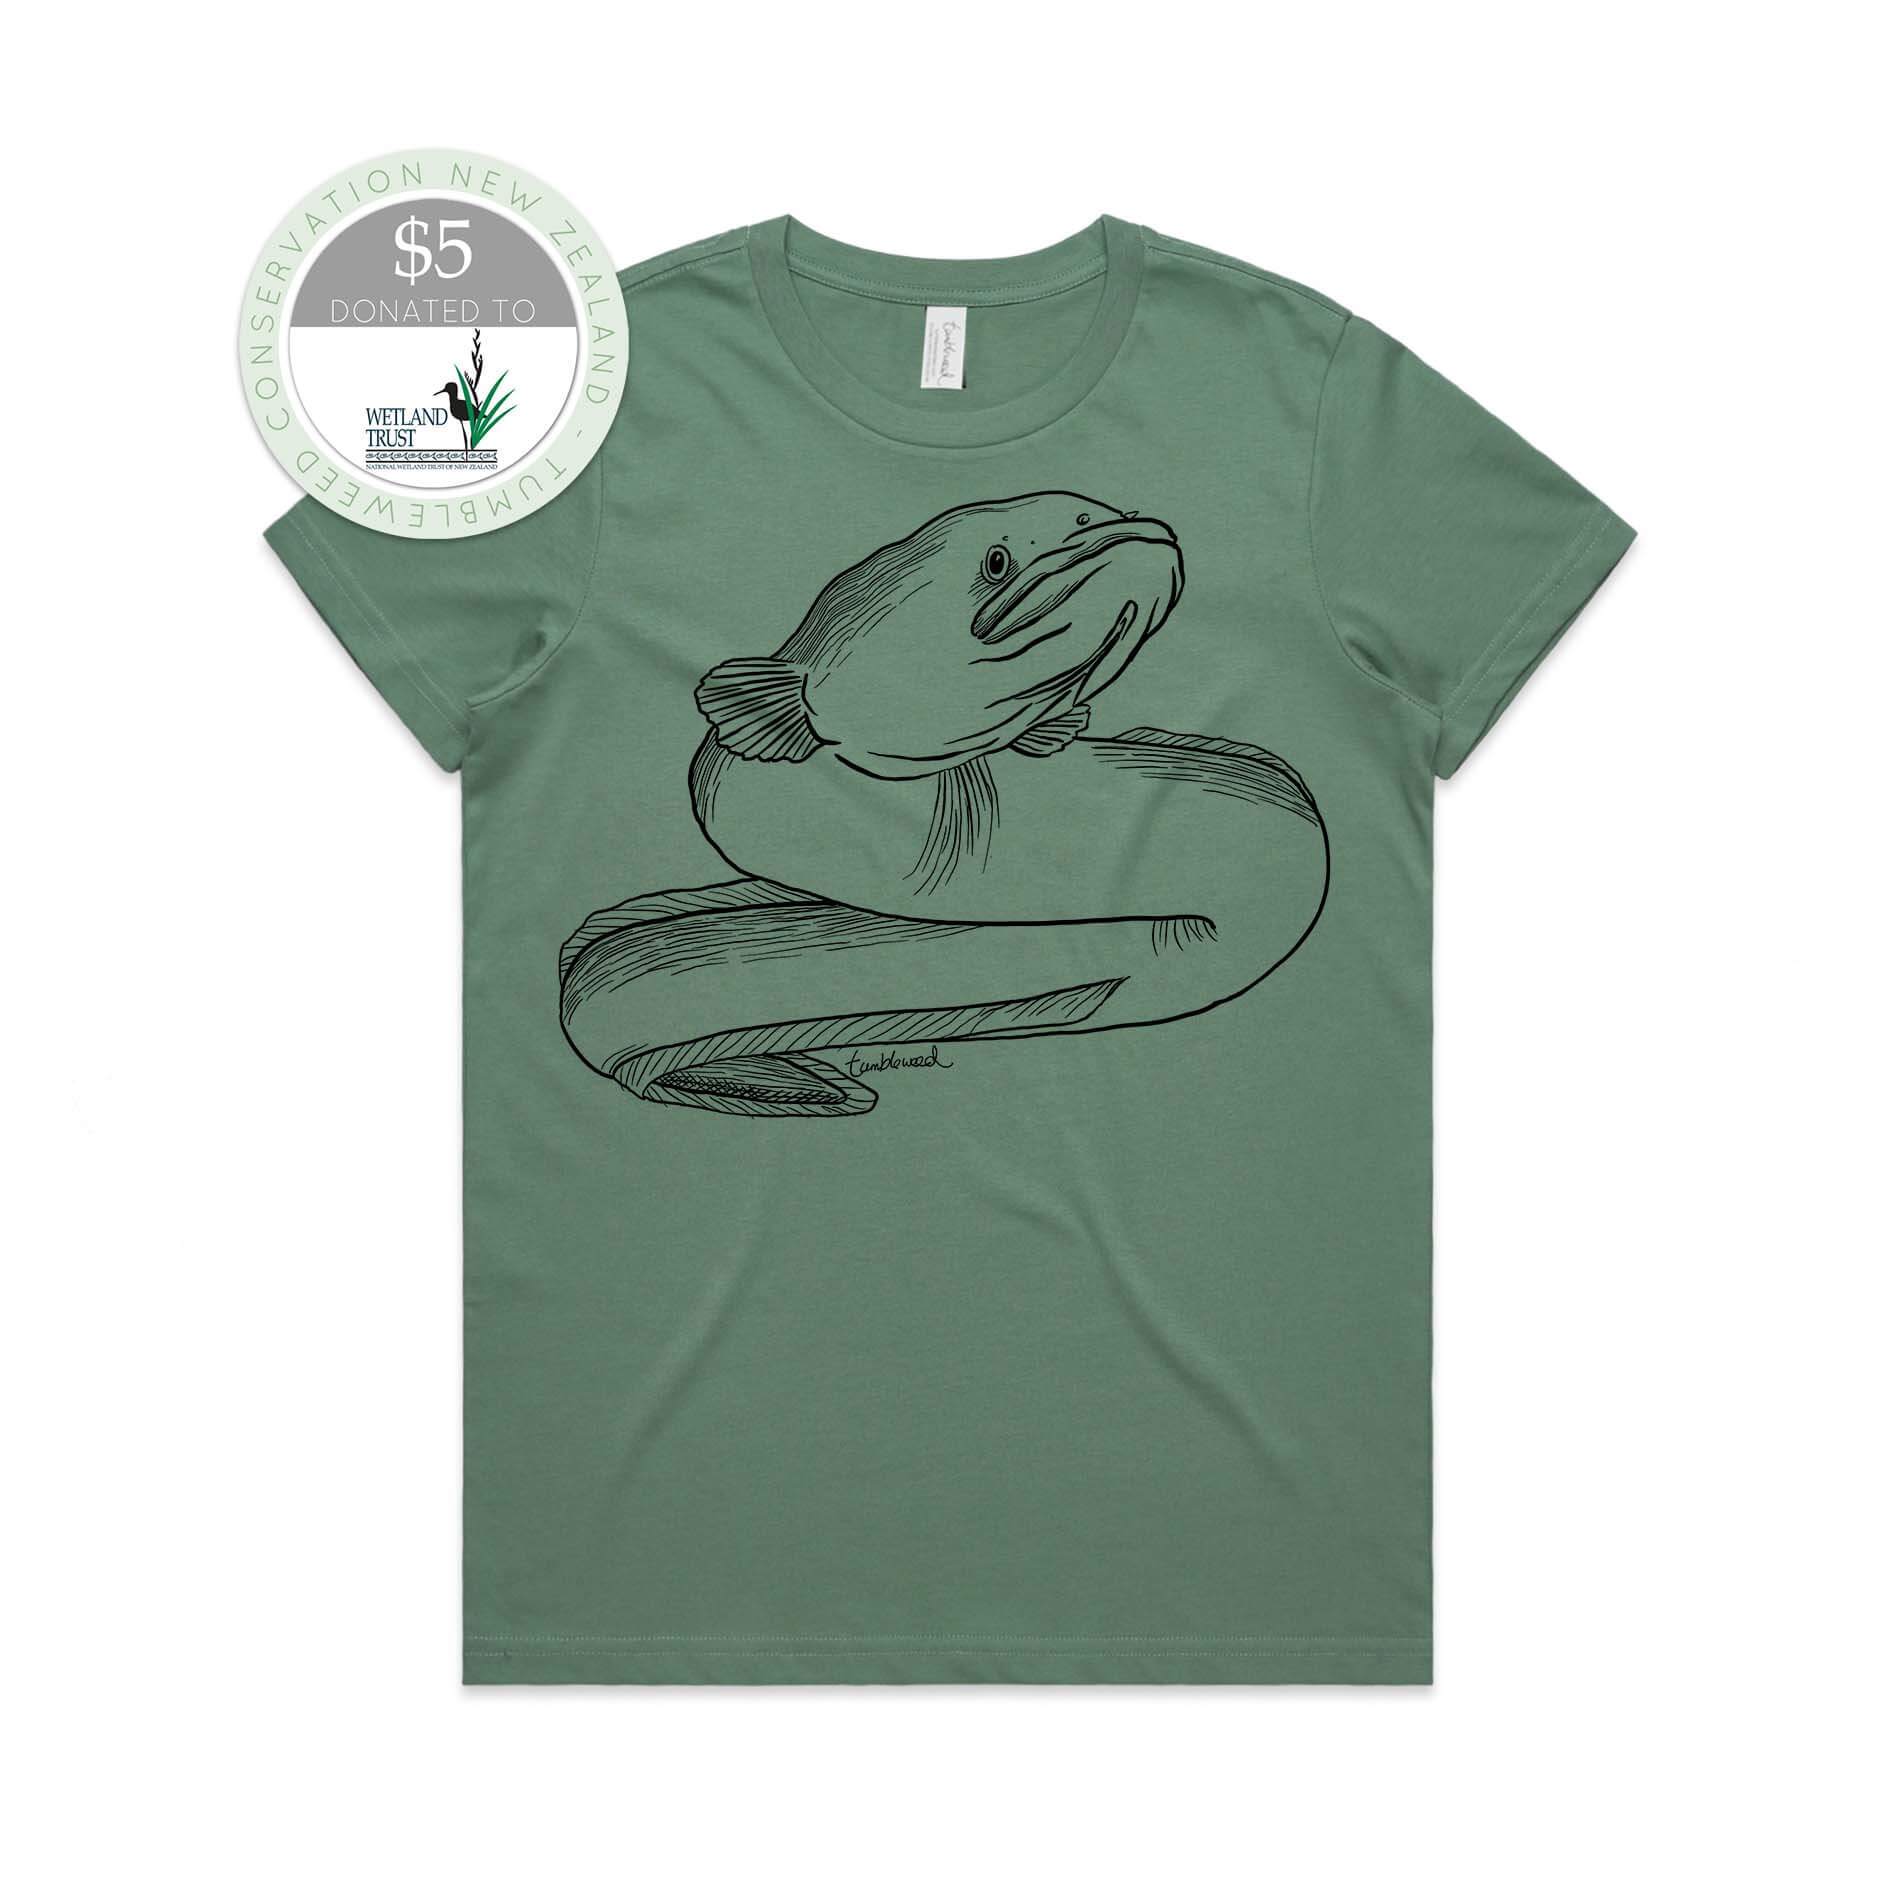 Sage, female t-shirt featuring a screen printed Longfin Eel/Tuna design.